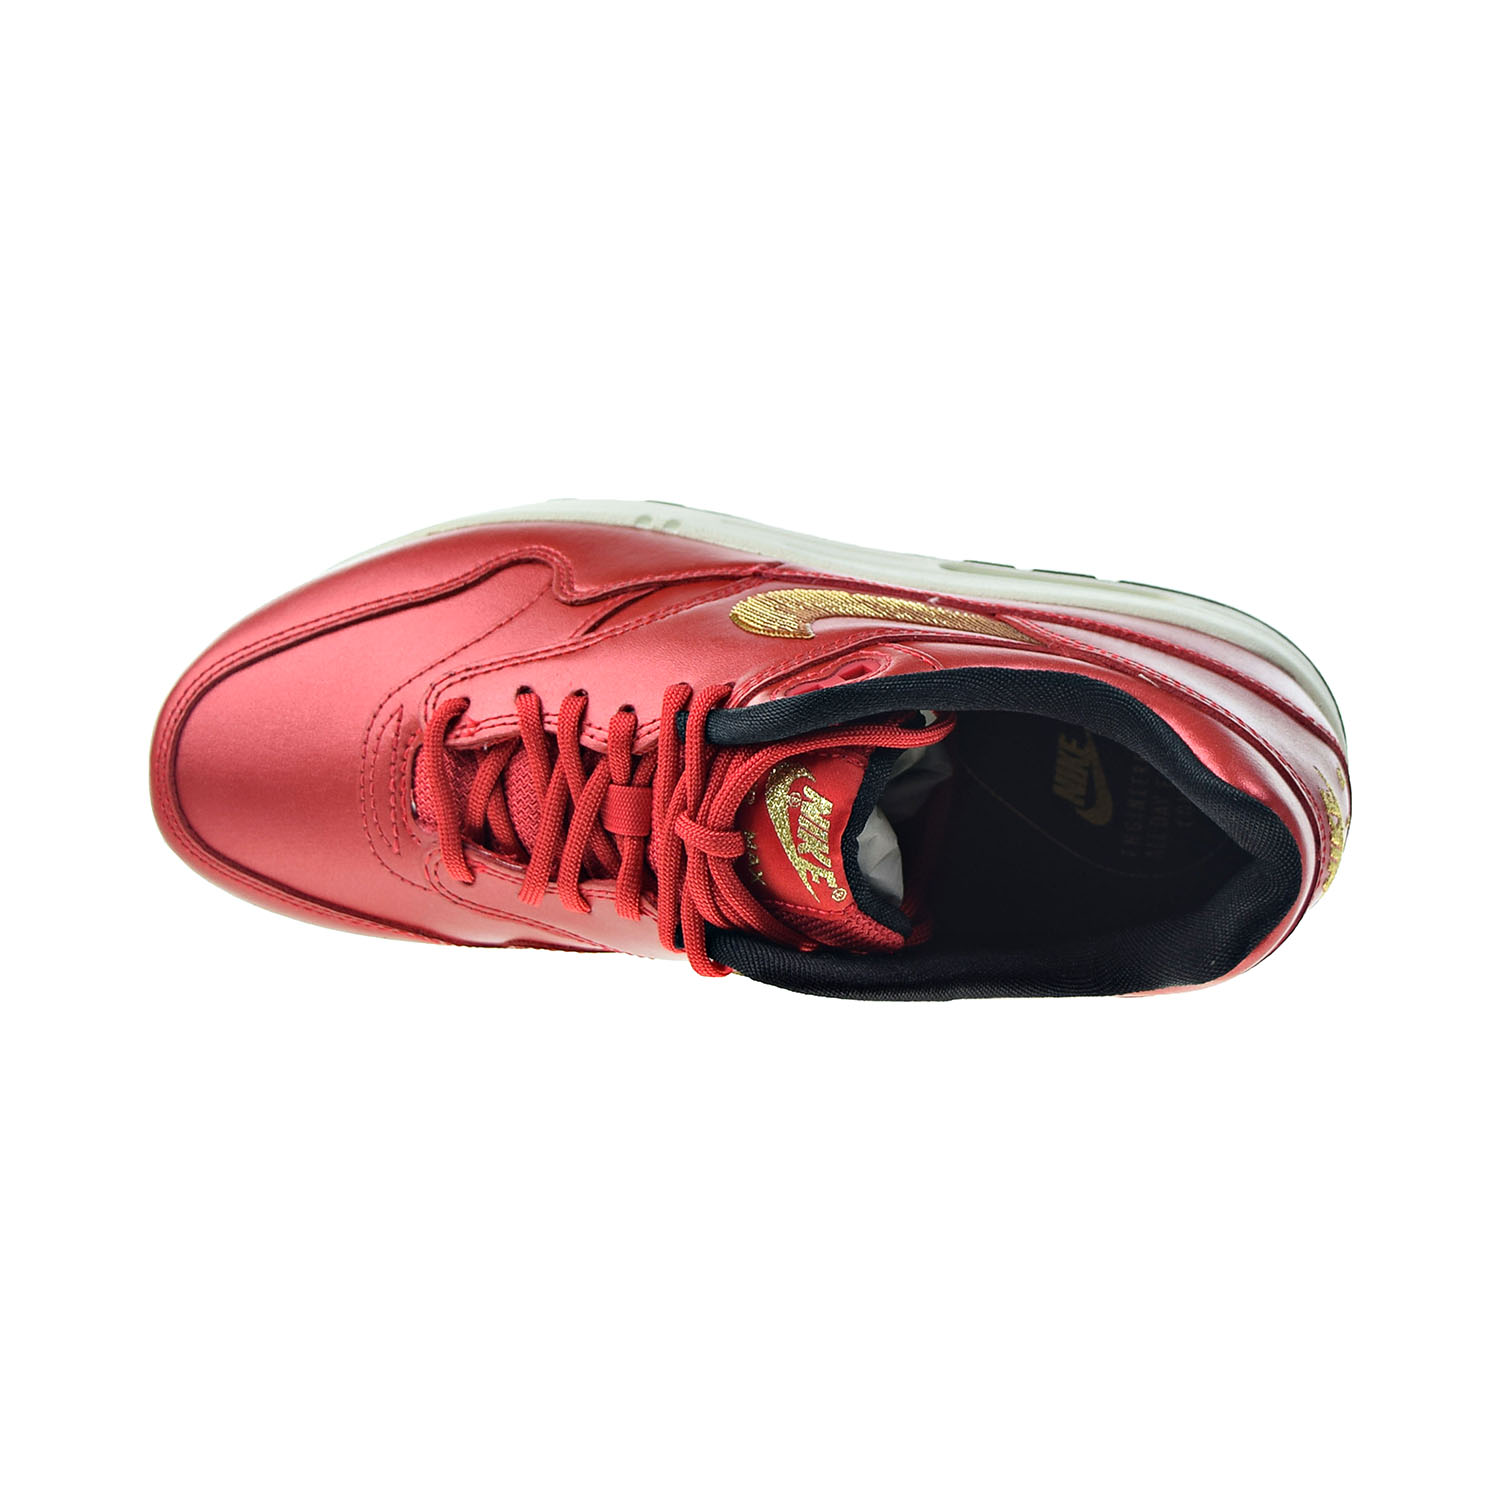 Nike Air Max 1 Women's Shoes University Red-Metallic Gold ct1149-600 - image 5 of 6